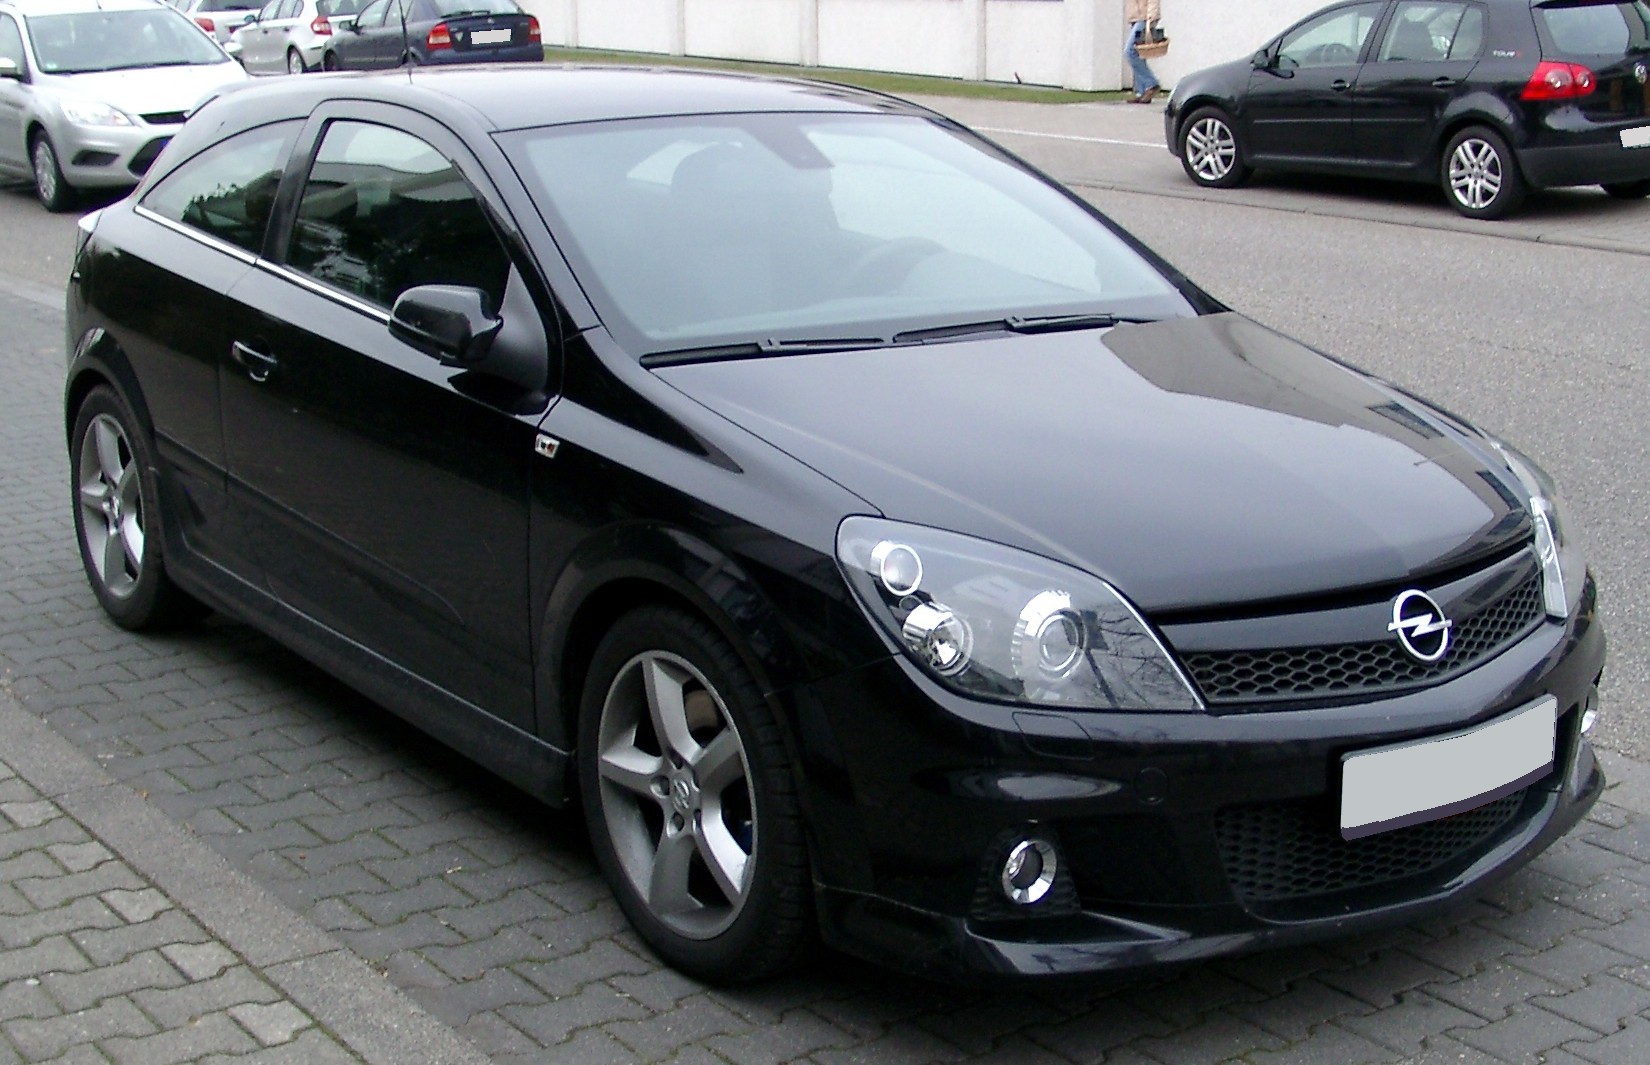 File:Opel Astra H GTC Saphirschwarz.JPG - Wikimedia Commons